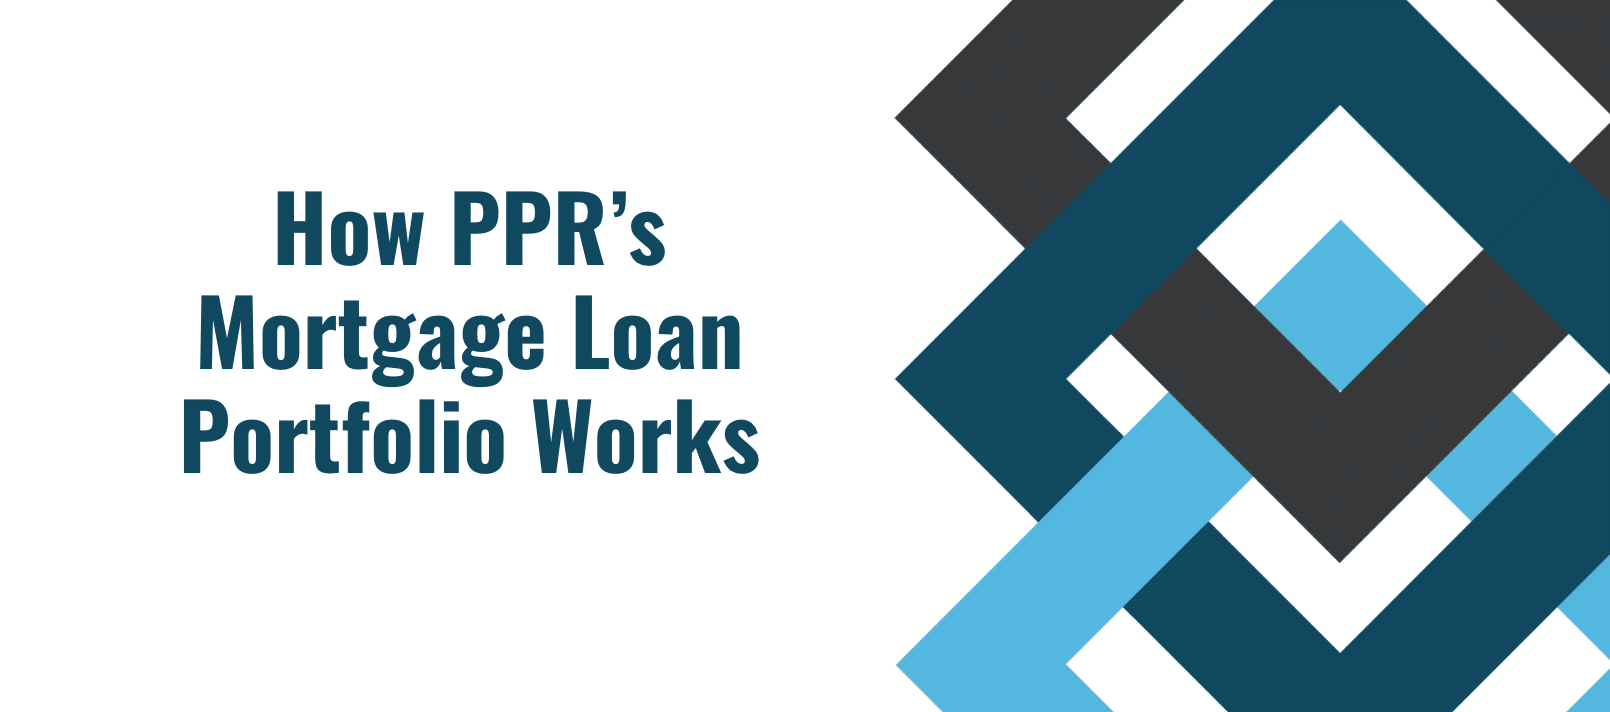 How PPR's mortgage loan portfolio works